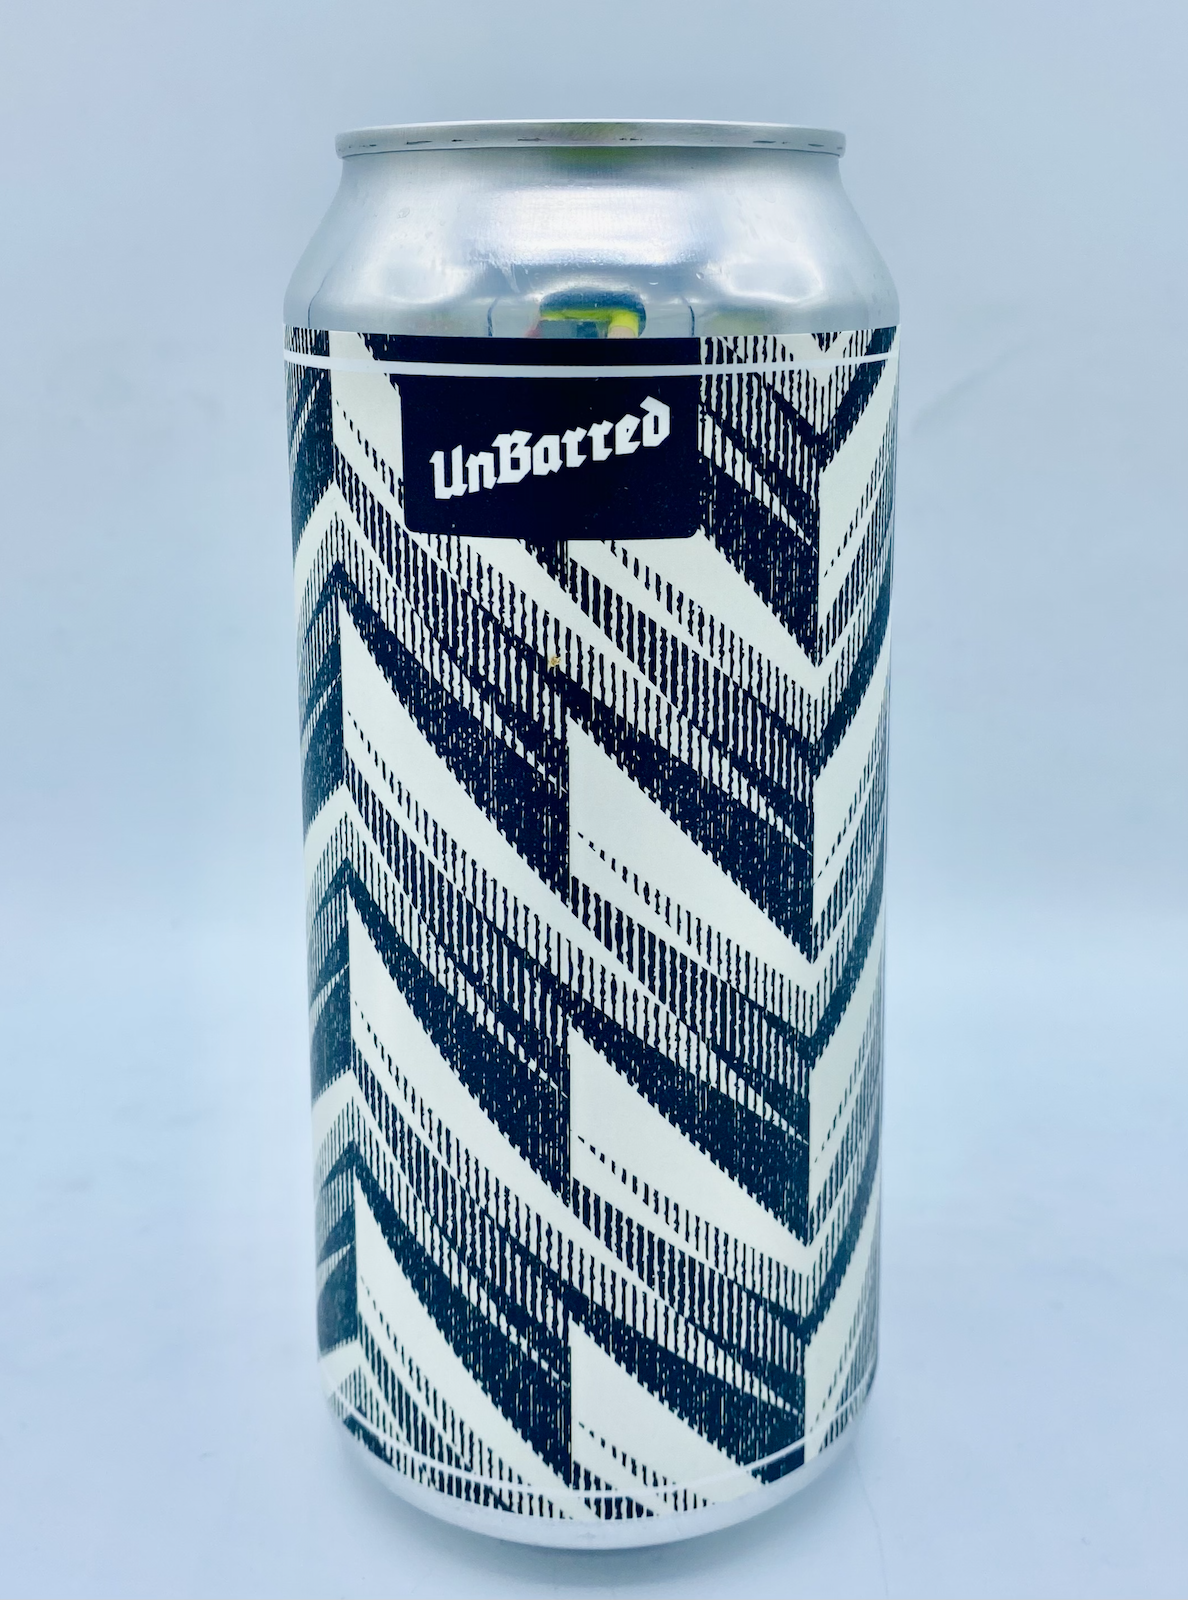 UnBarred Brewery - Citra, Colombus & Cryo Ekuanot 7.0%